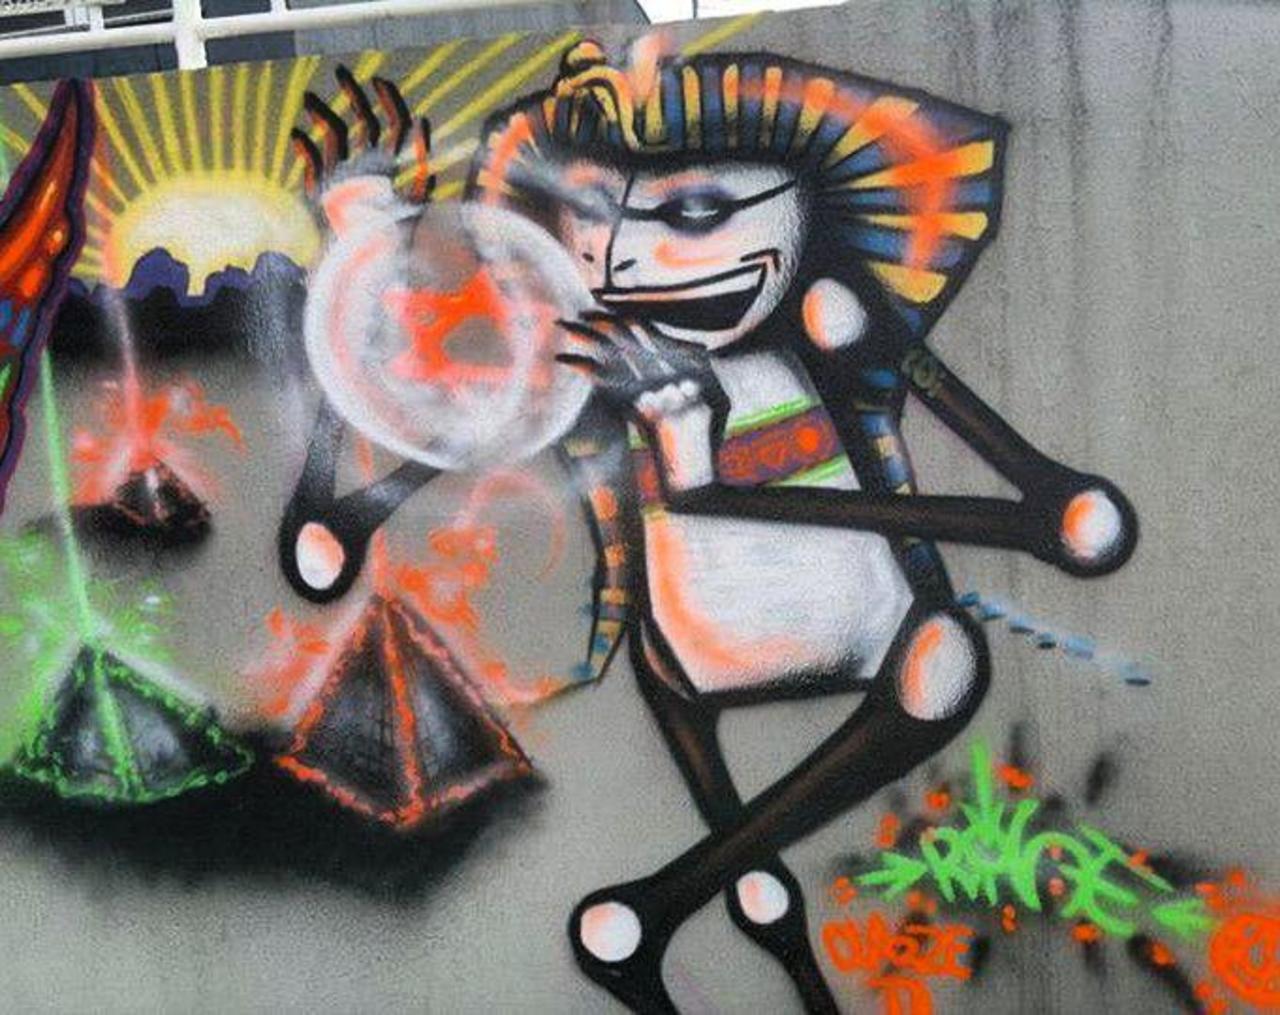 Natural Mystic #rine #graffiti #artistasurbanoscrew #streetartrio #streetart by artistasurbanoscrew http://t.co/Dmx2jSHSuC